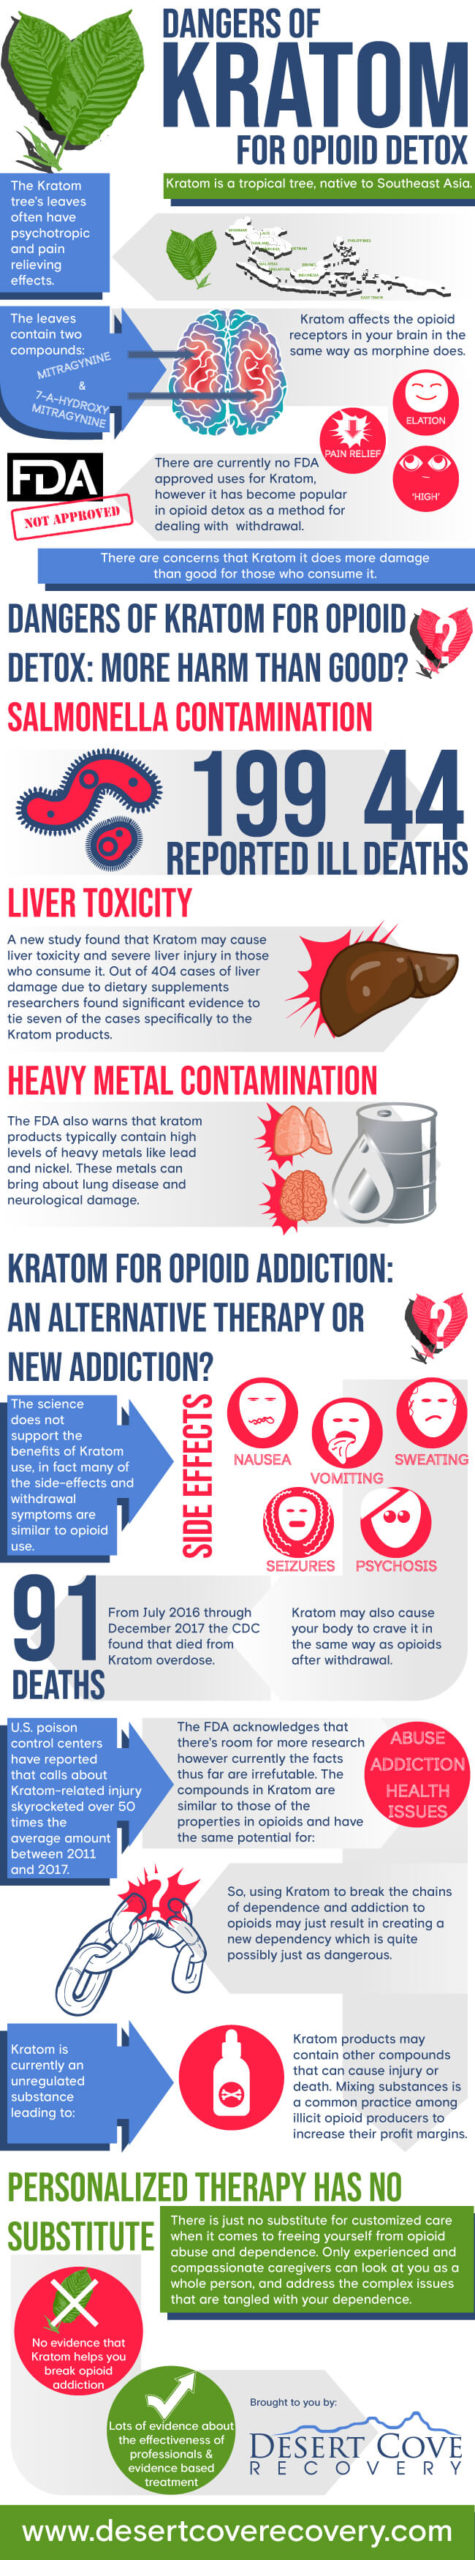 Dangers of Kratom for Opioid Detox